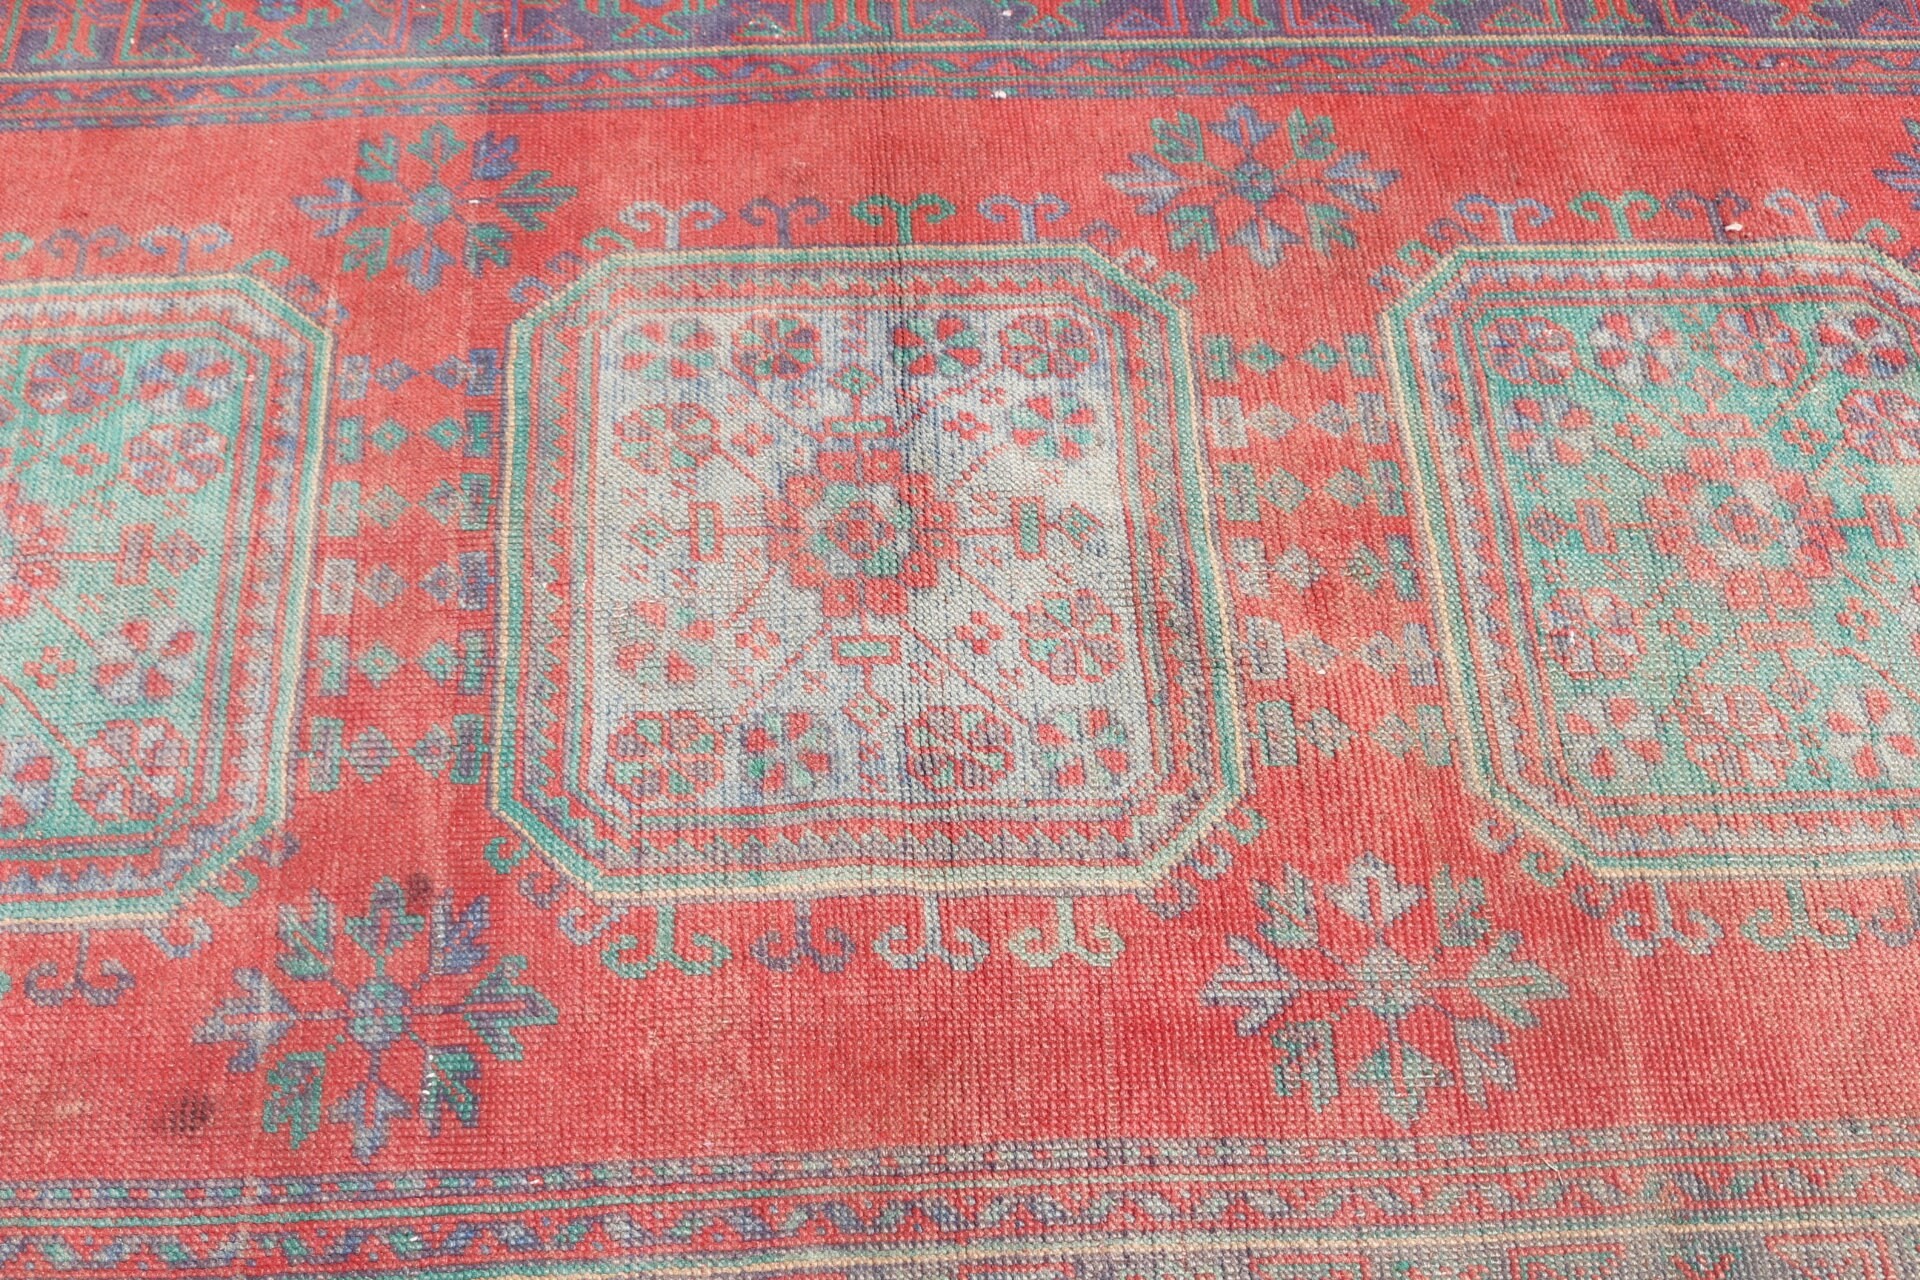 Dining Room Rug, Rugs for Floor, Handwoven Rug, Oriental Rug, Red Kitchen Rug, 4.2x9.2 ft Area Rug, Vintage Rug, Floor Rugs, Turkish Rug